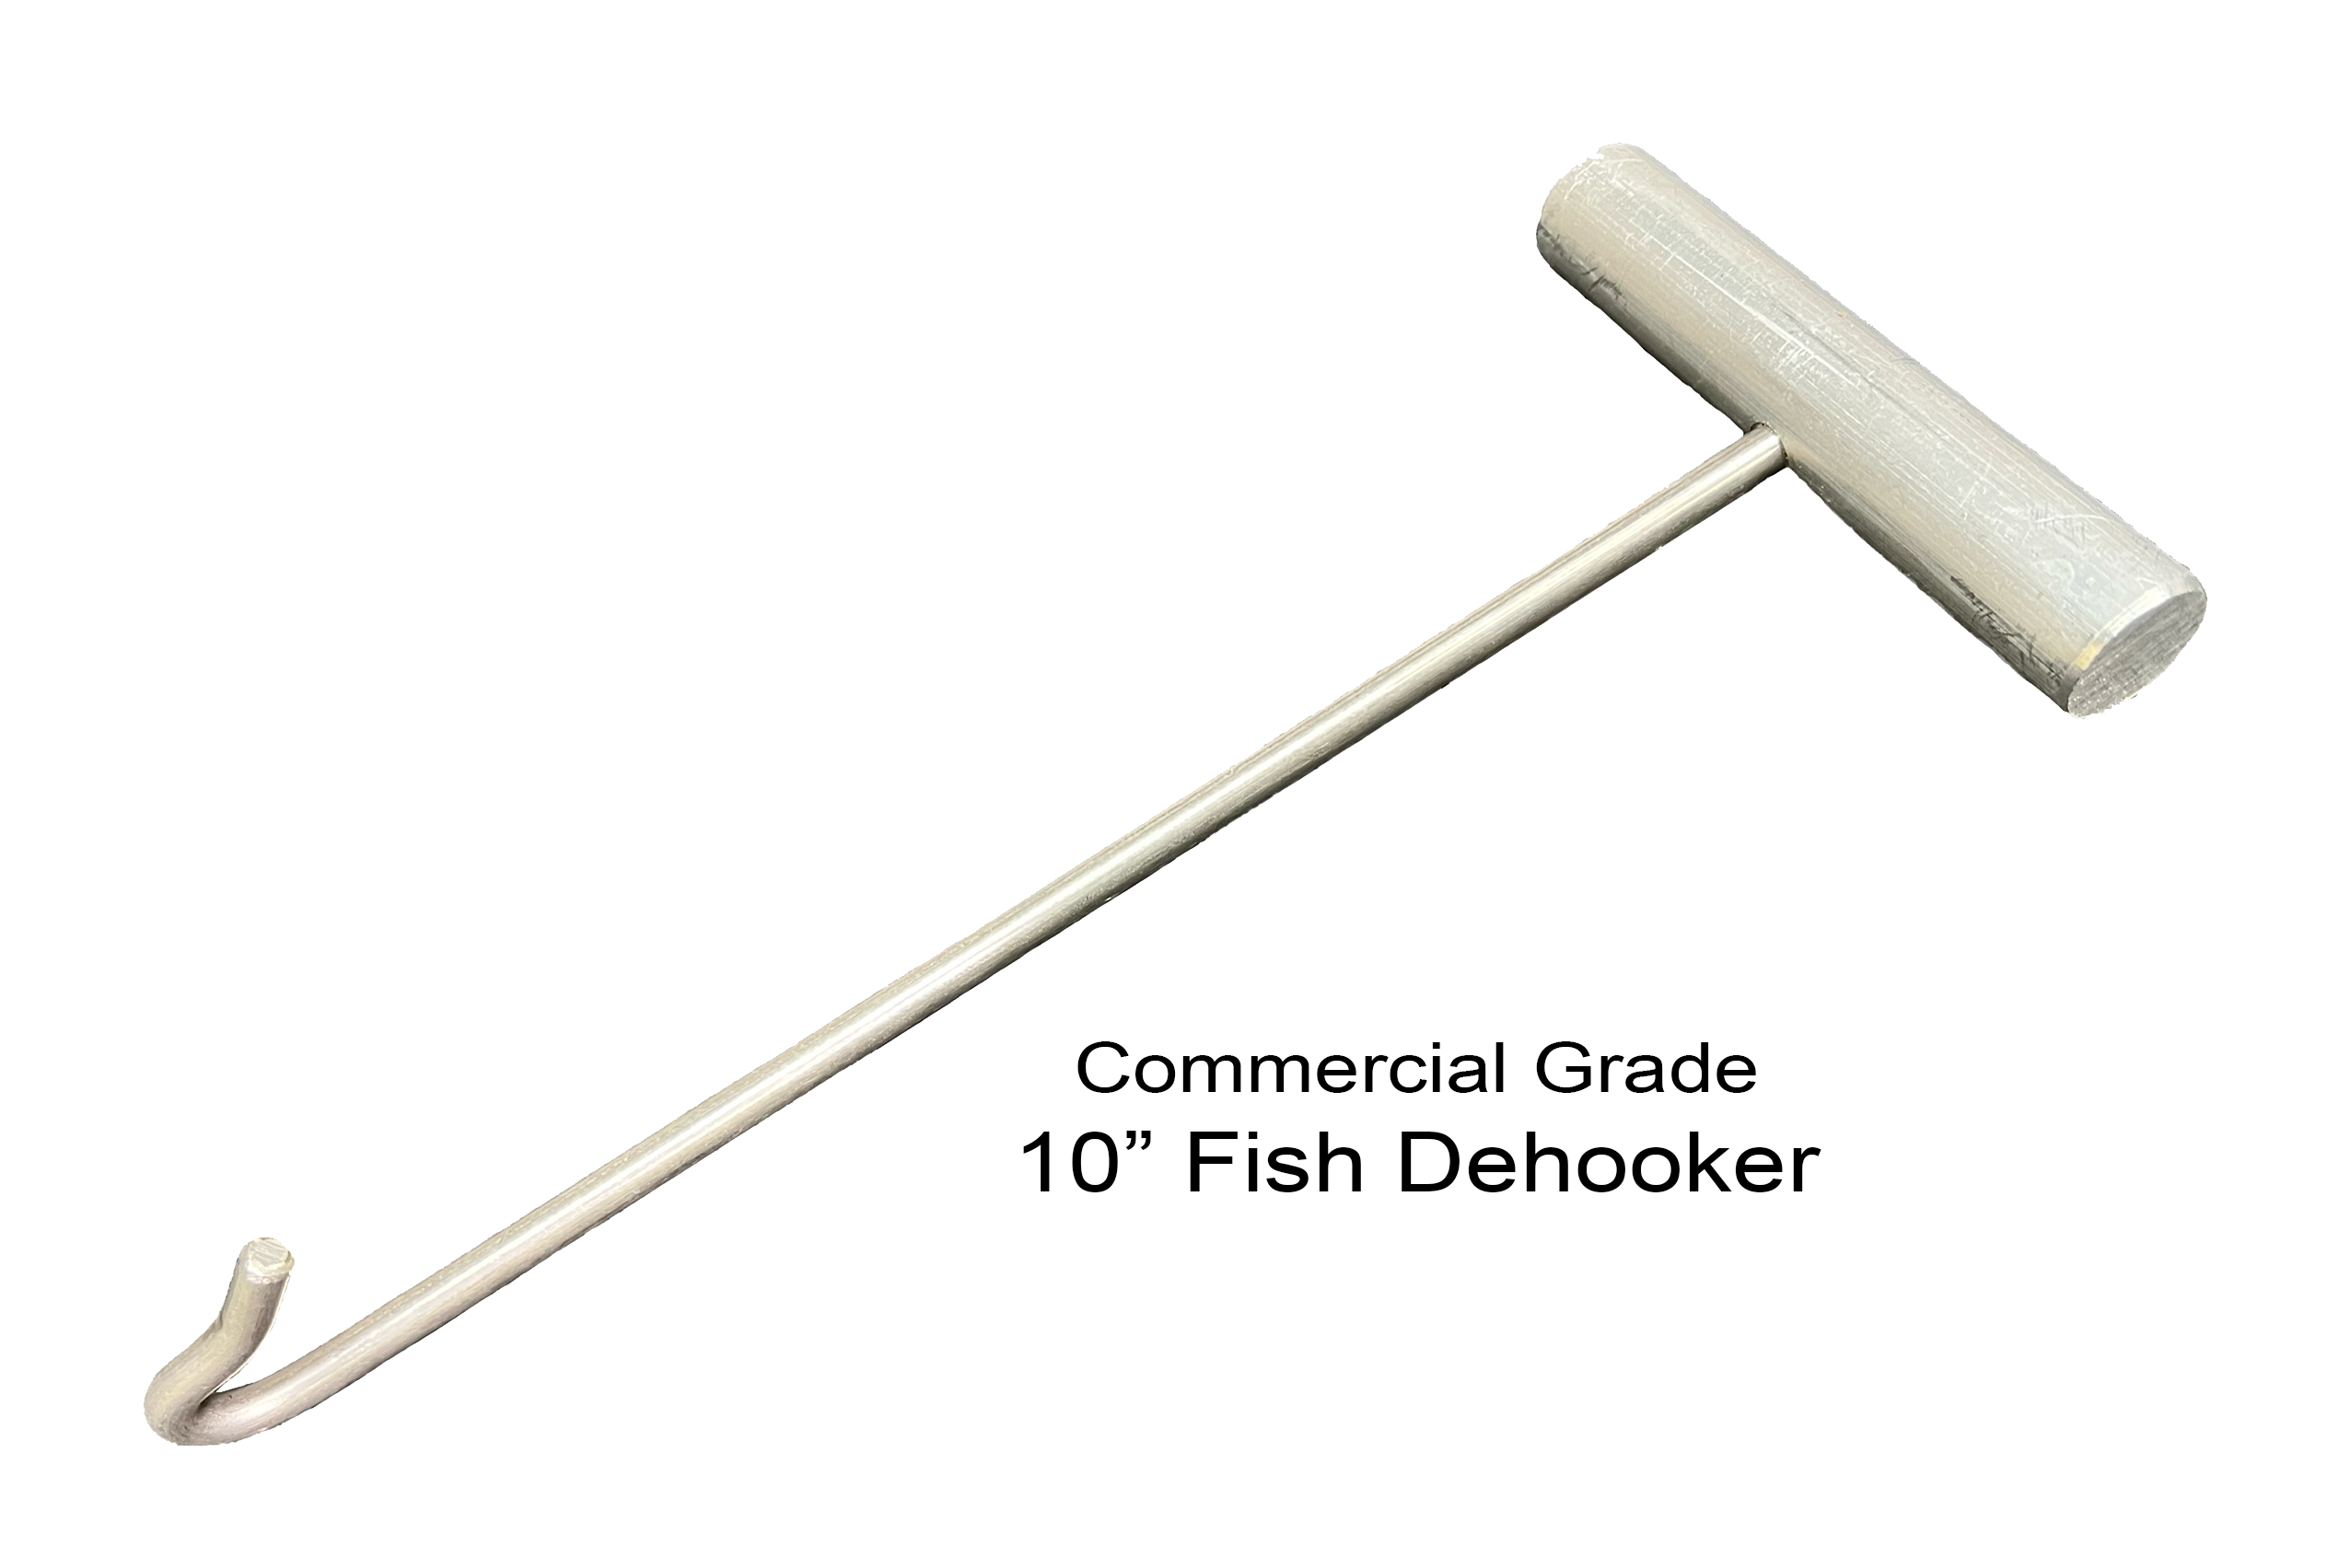 Commercial Grade 10 Fish Dehooker - Stainless